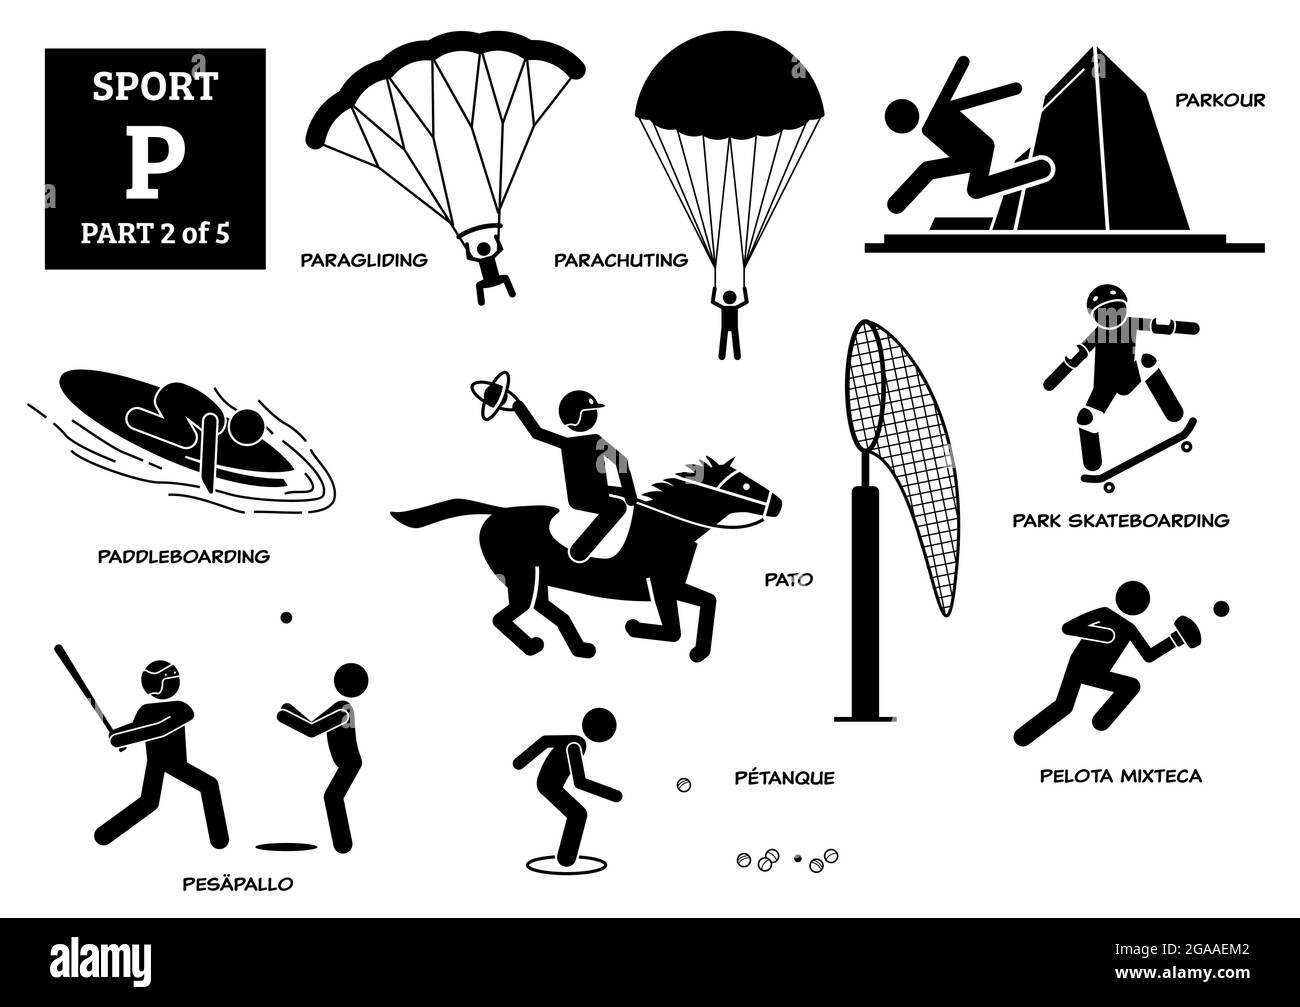 Sport games alphabet P vector icons pictogram. Paragliding, parachuting, parkour, paddleboarding, pato, park skateboarding, pesapallo, petanque, and p Stock Vector